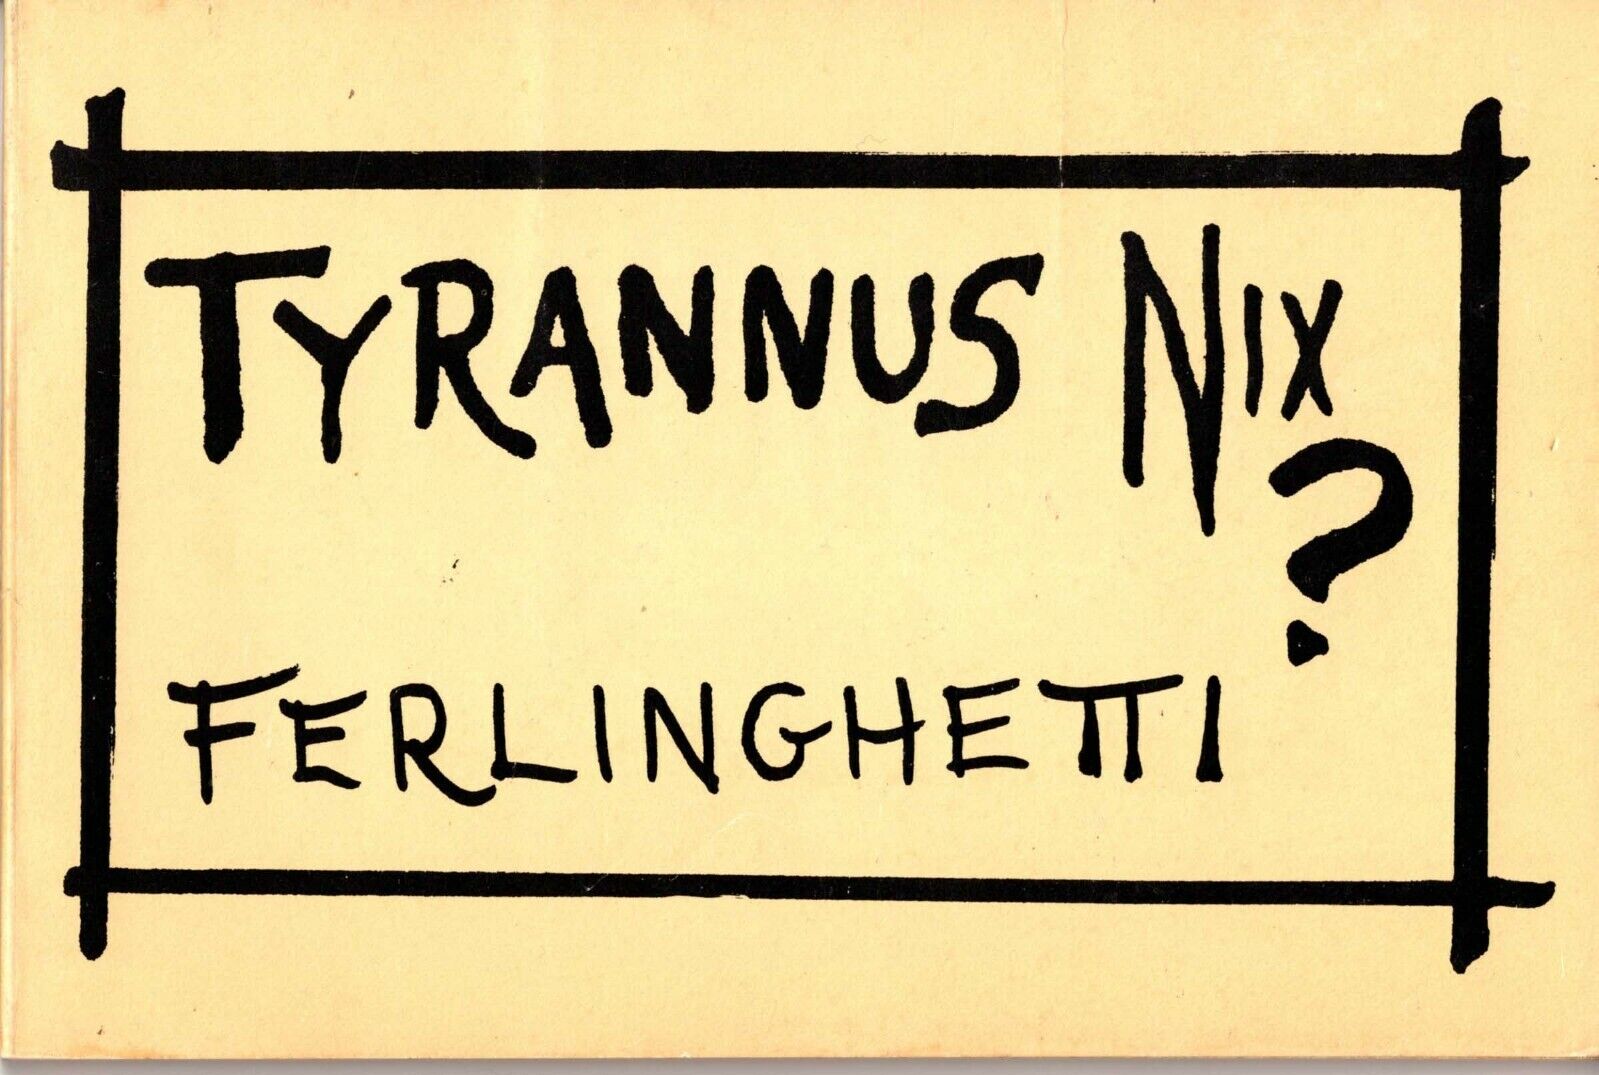 Tyrannus Nix? Paperback book 1969 by Lawrence Ferlinghetti